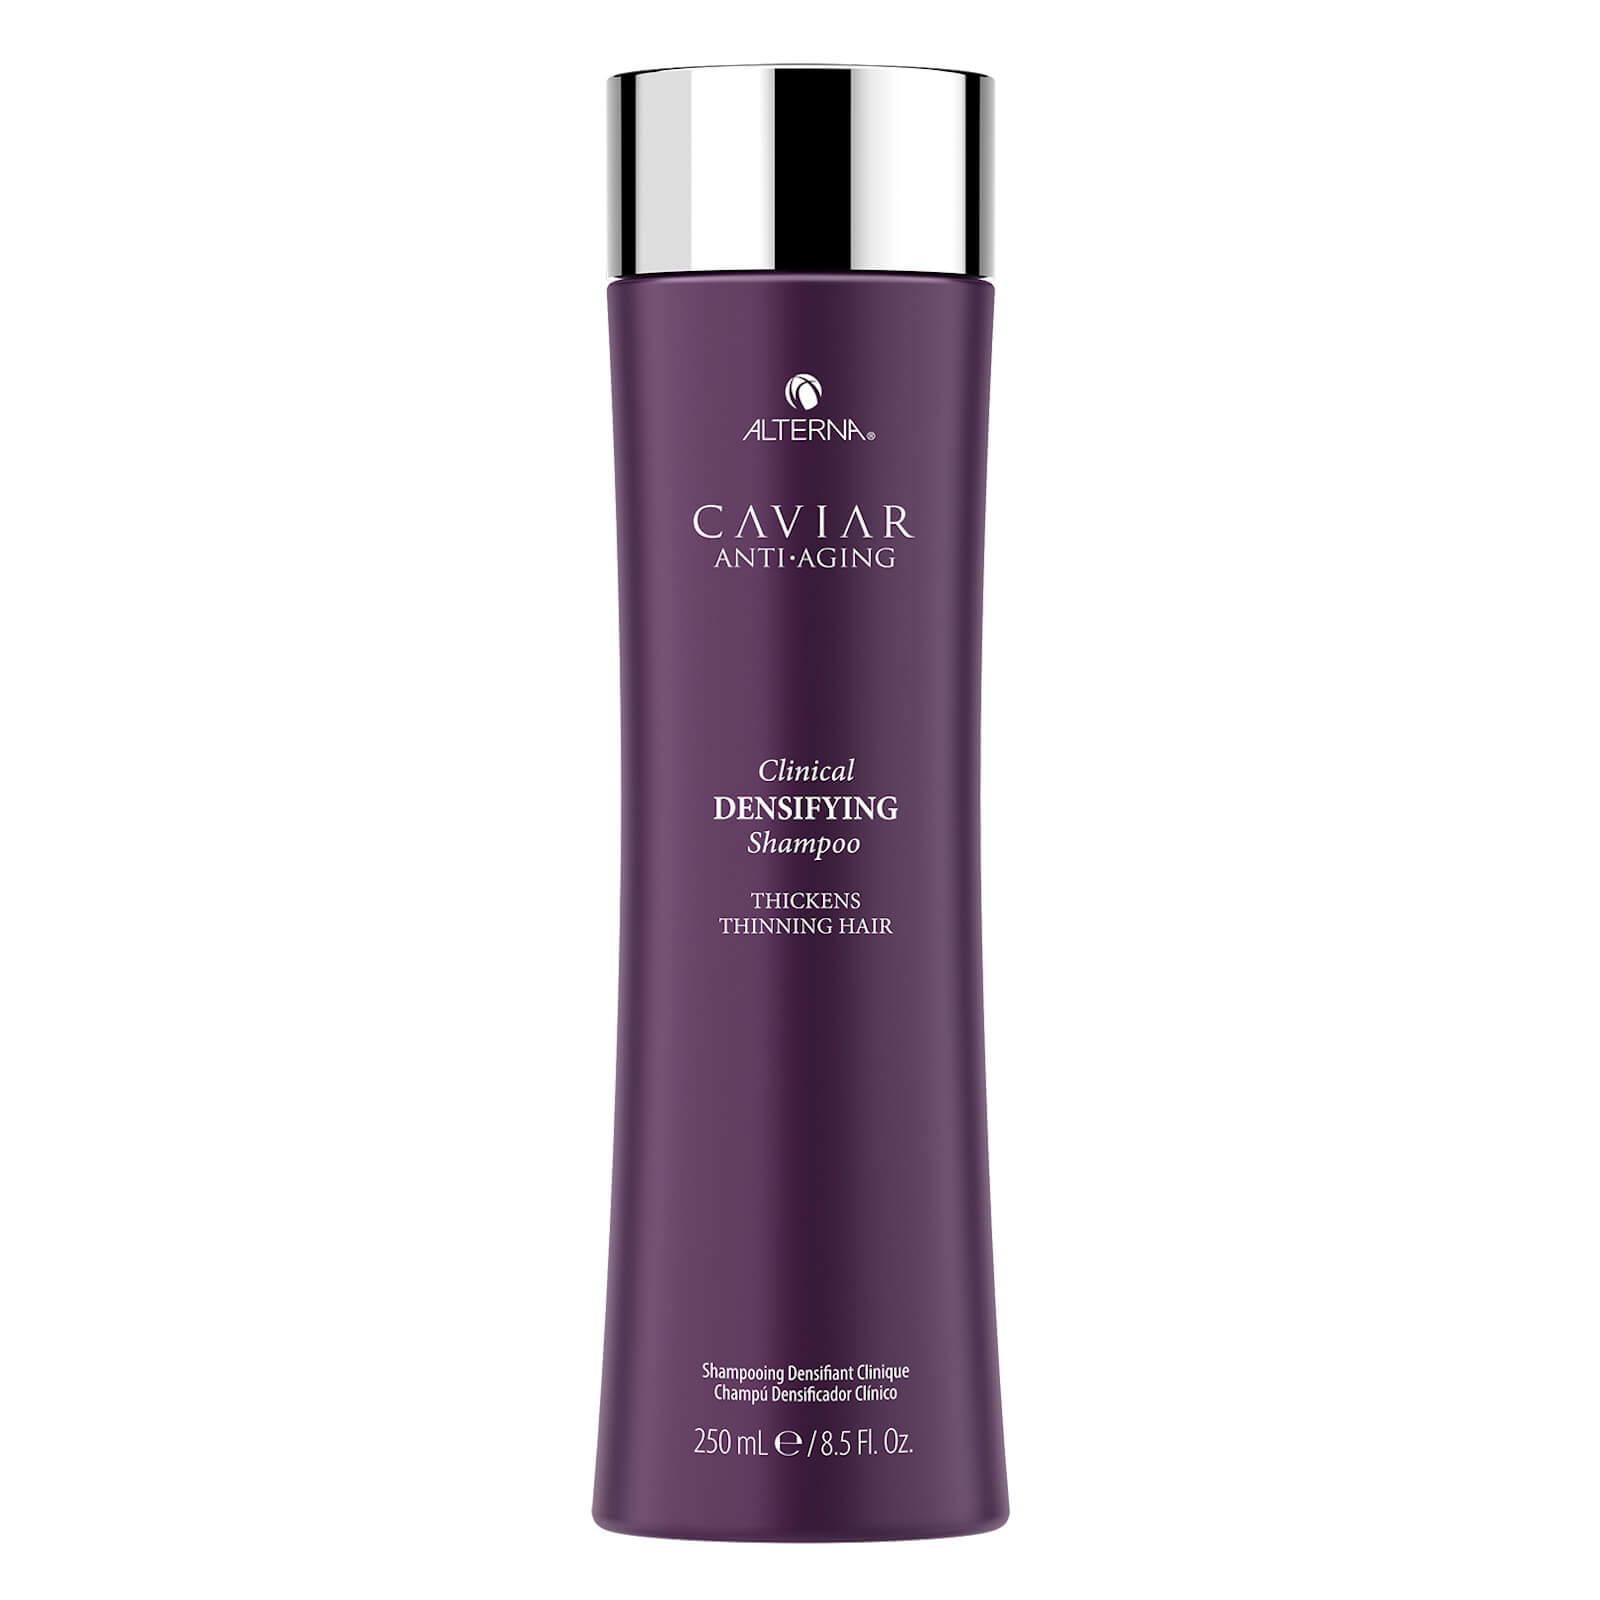 Alterna Caviar Clinical Densifying Shampoo 250ml lookfantastic.com imagine